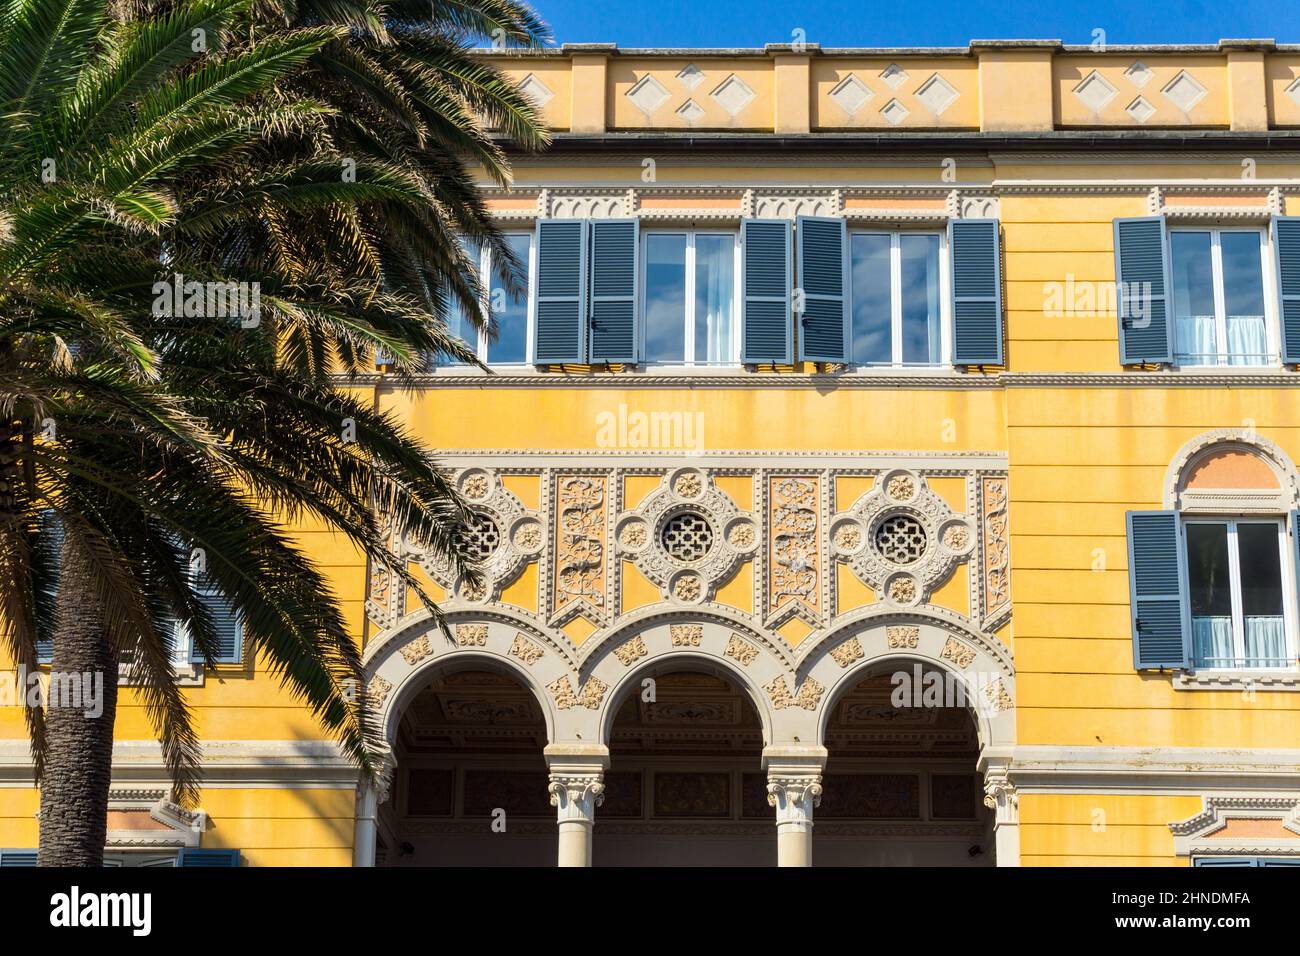 Italy, Liguria, Arenzano, Grand Hotel Stock Photo